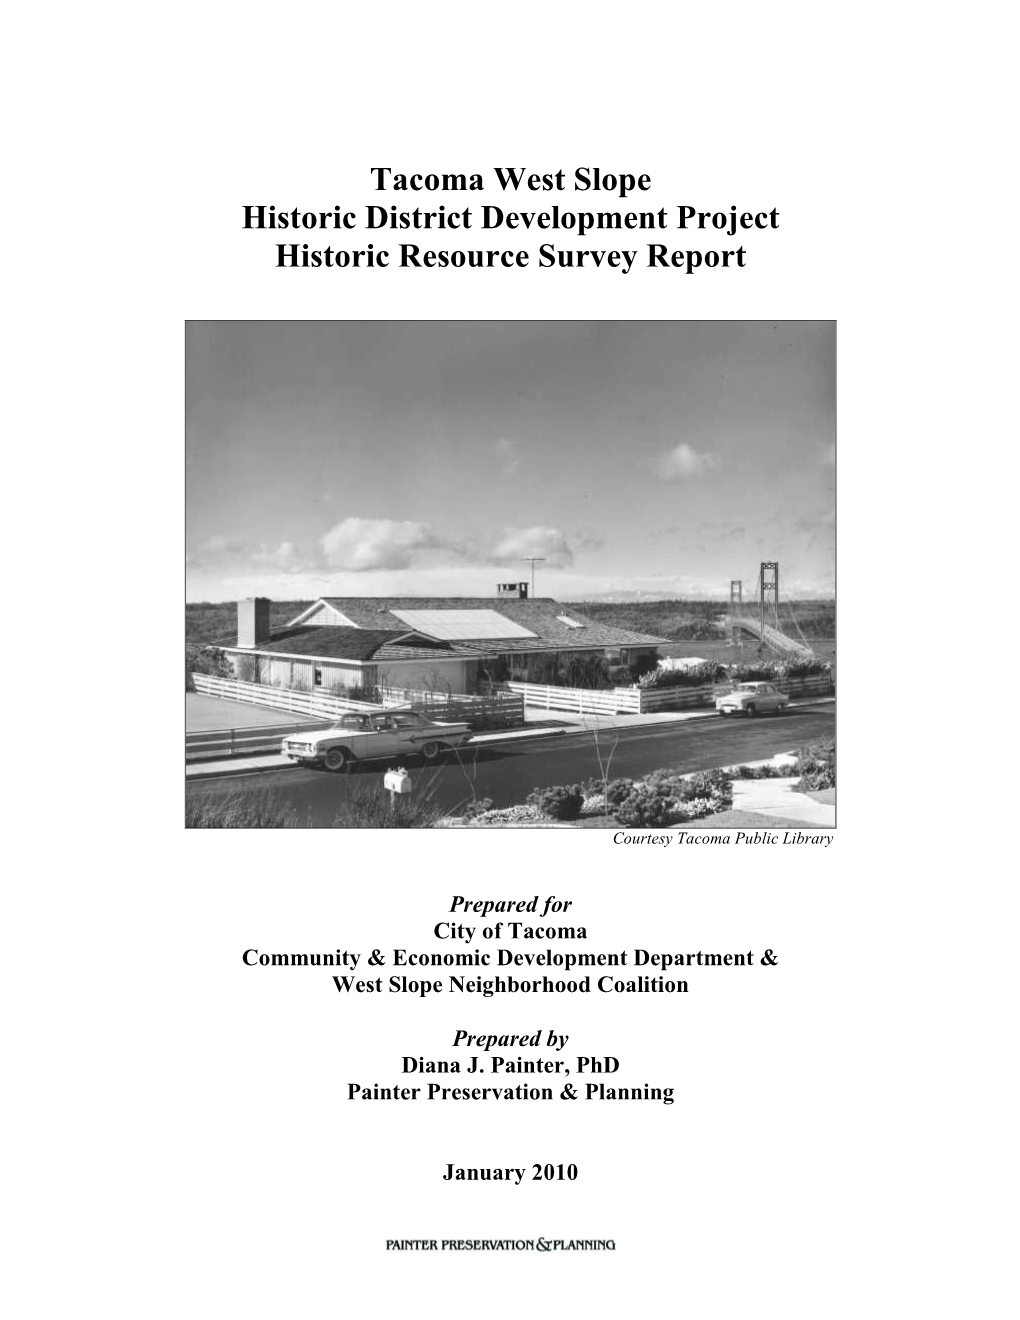 Tacoma West Slope Historic District Development Project Historic Resource Survey Report